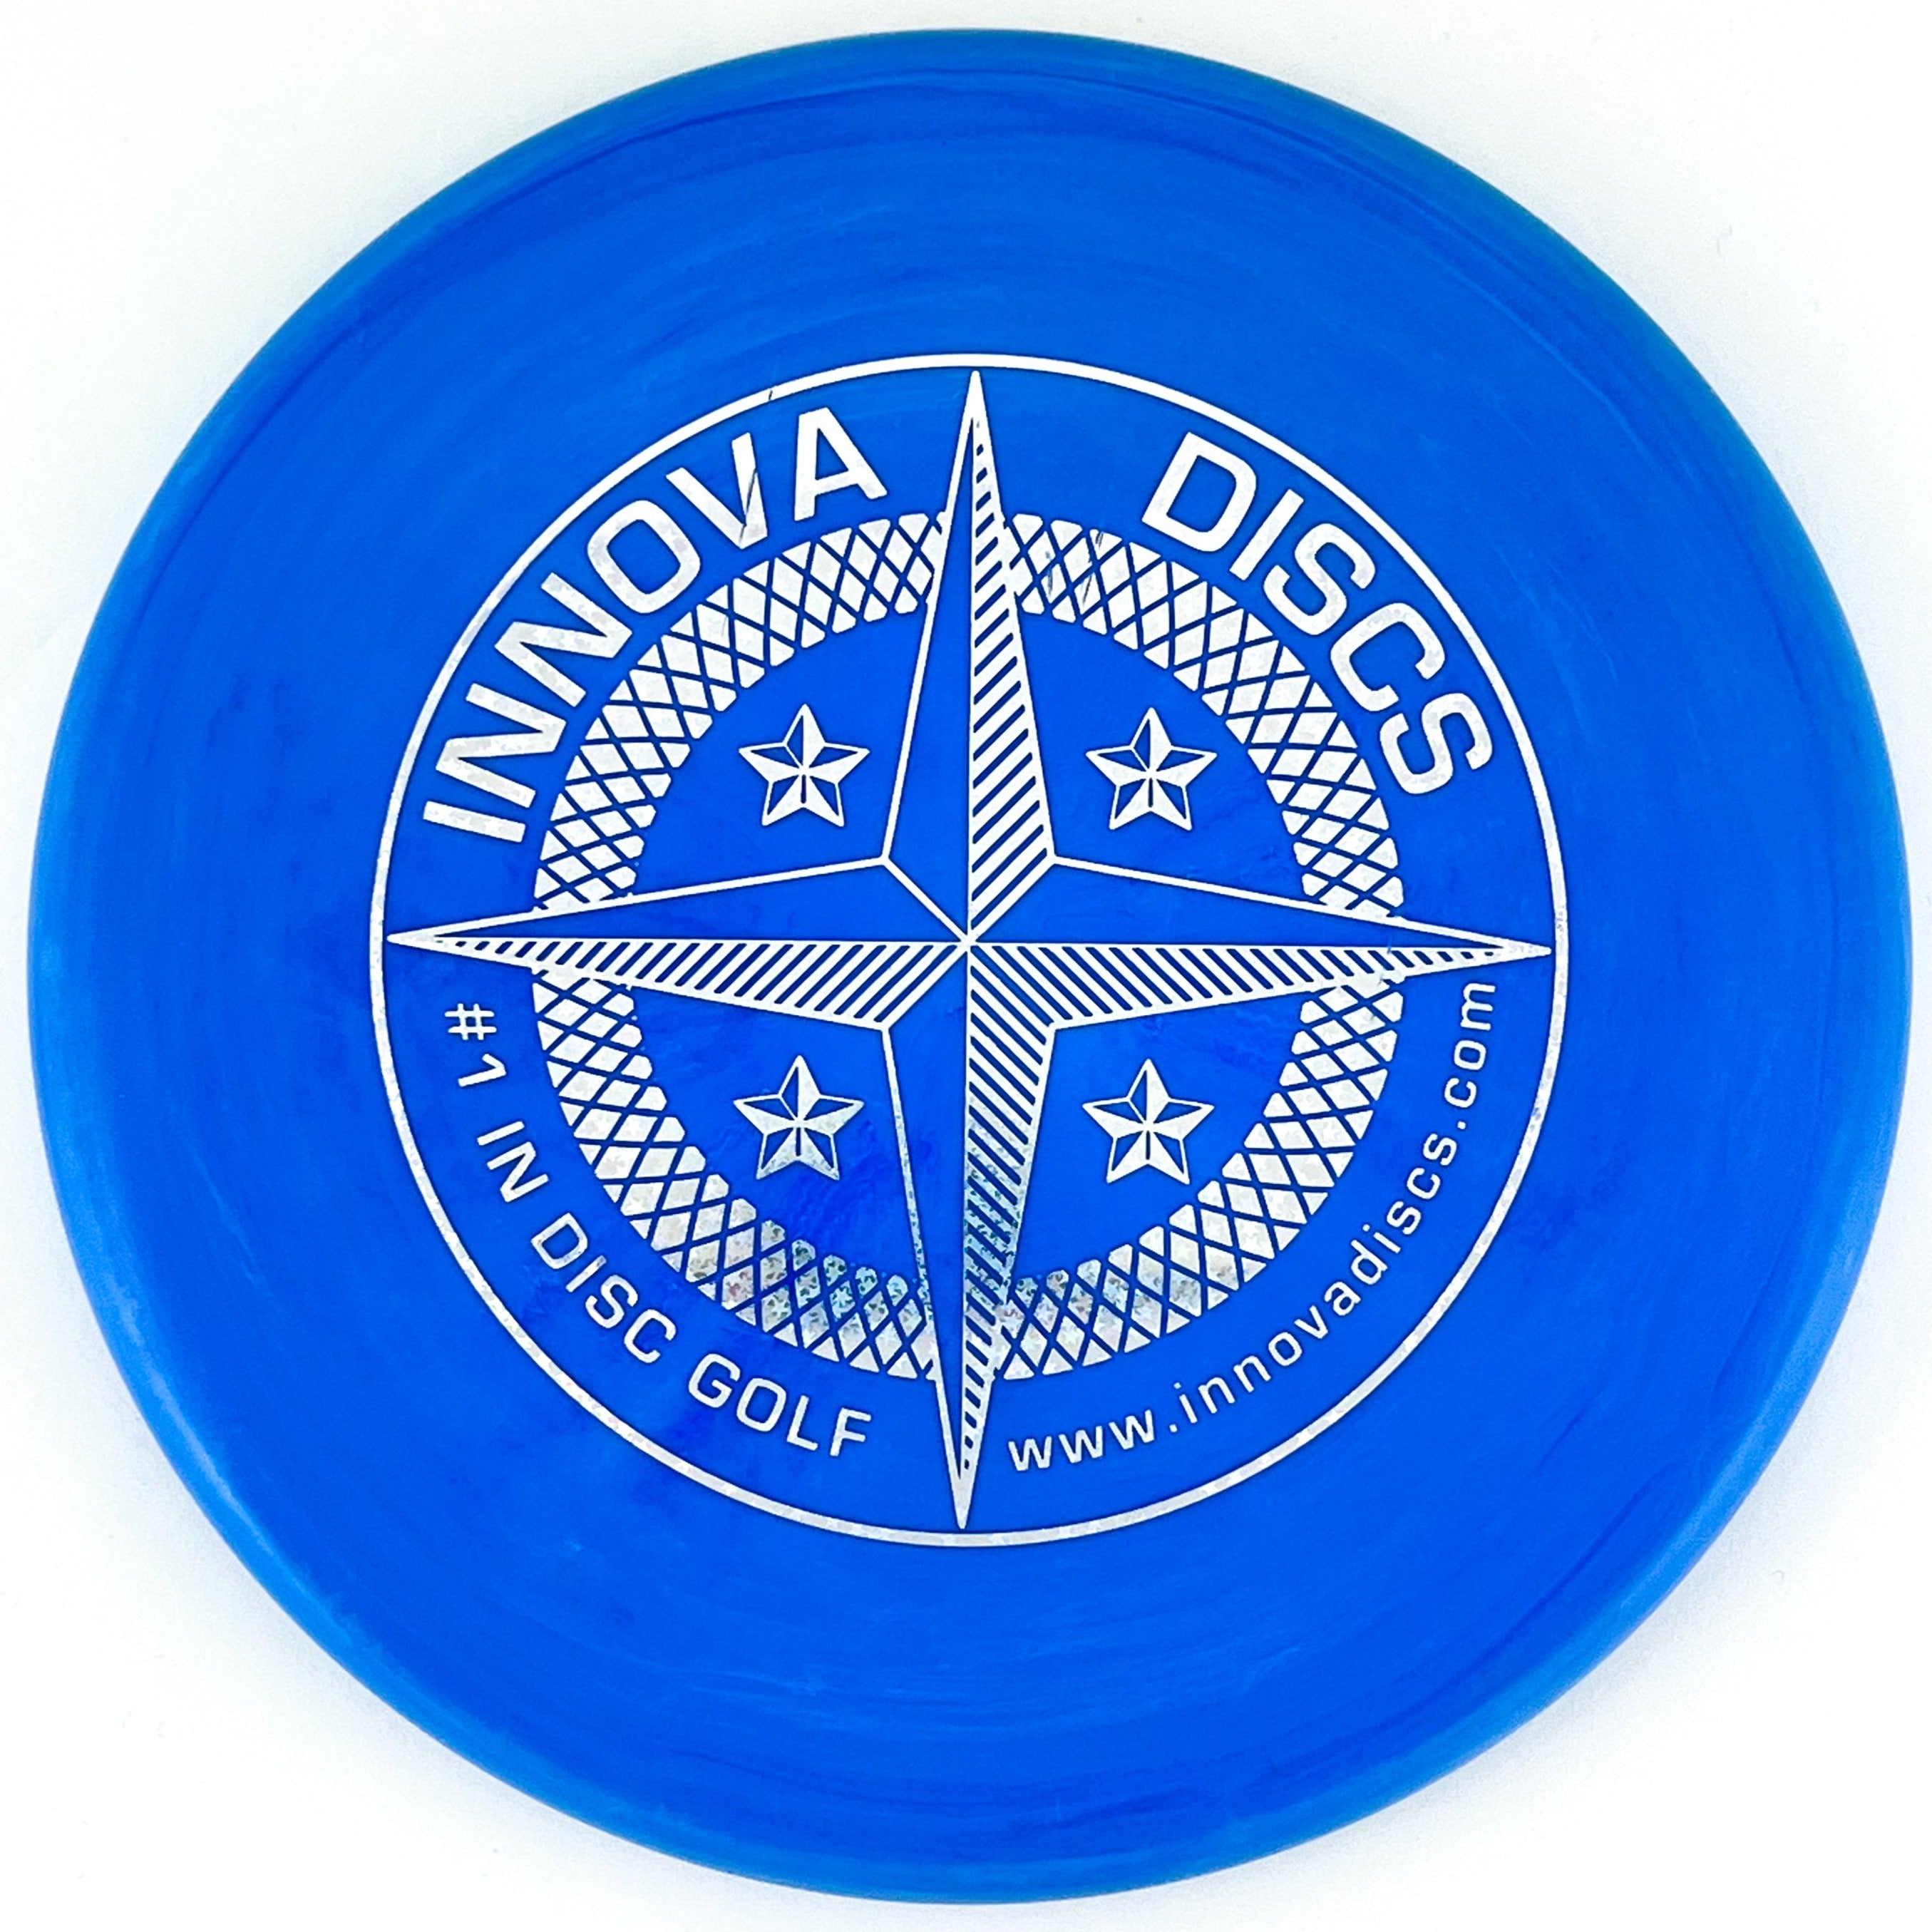 Blue Innova Proto Star Stud disc golf putt and approach disc by Innova Champion Discs.